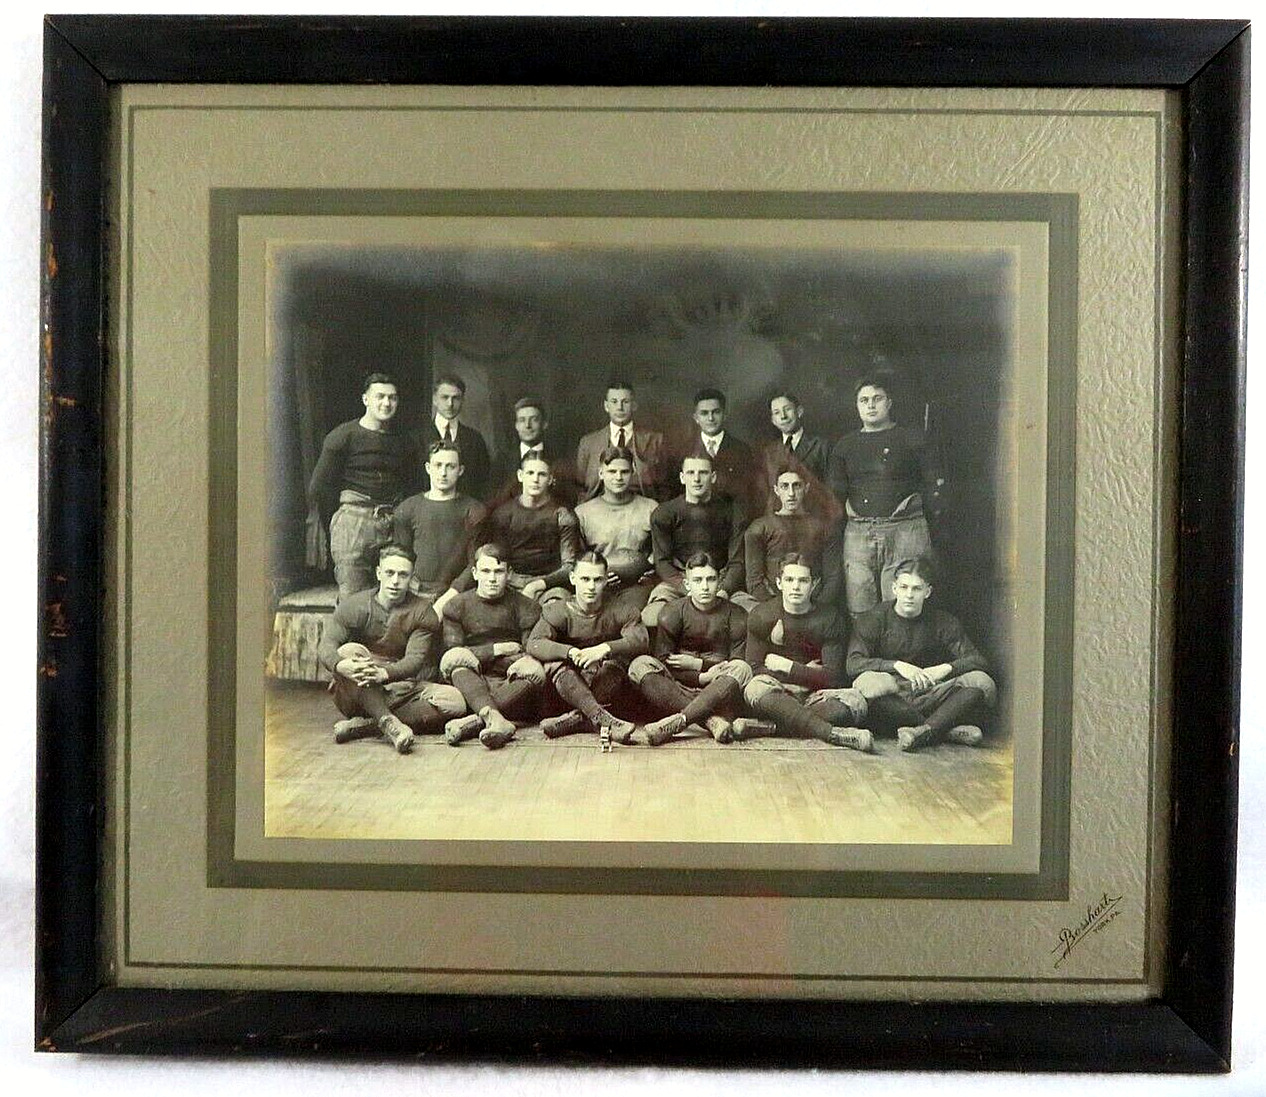 1921 Original New York University Foot Ball Team Photo